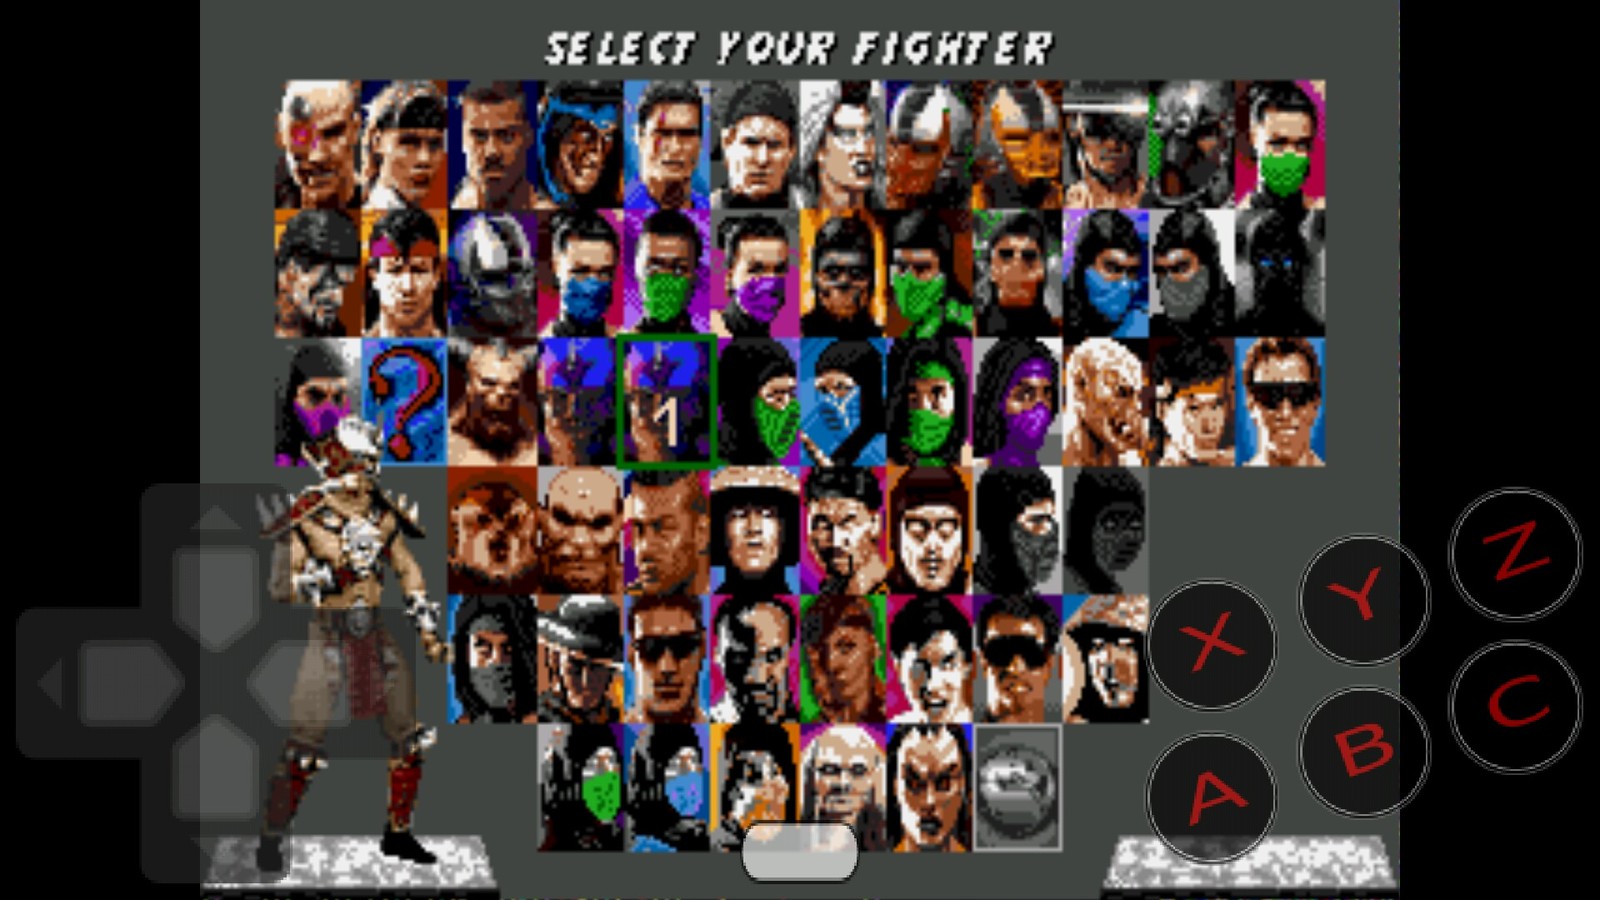 Мега мортал комбат. Mortal Kombat Trilogy Sega персонажи. Ultimate Mortal Kombat 3. Mortal Kombat Trilogy бойцы. Мортал комбат 3 ультиматум сега.